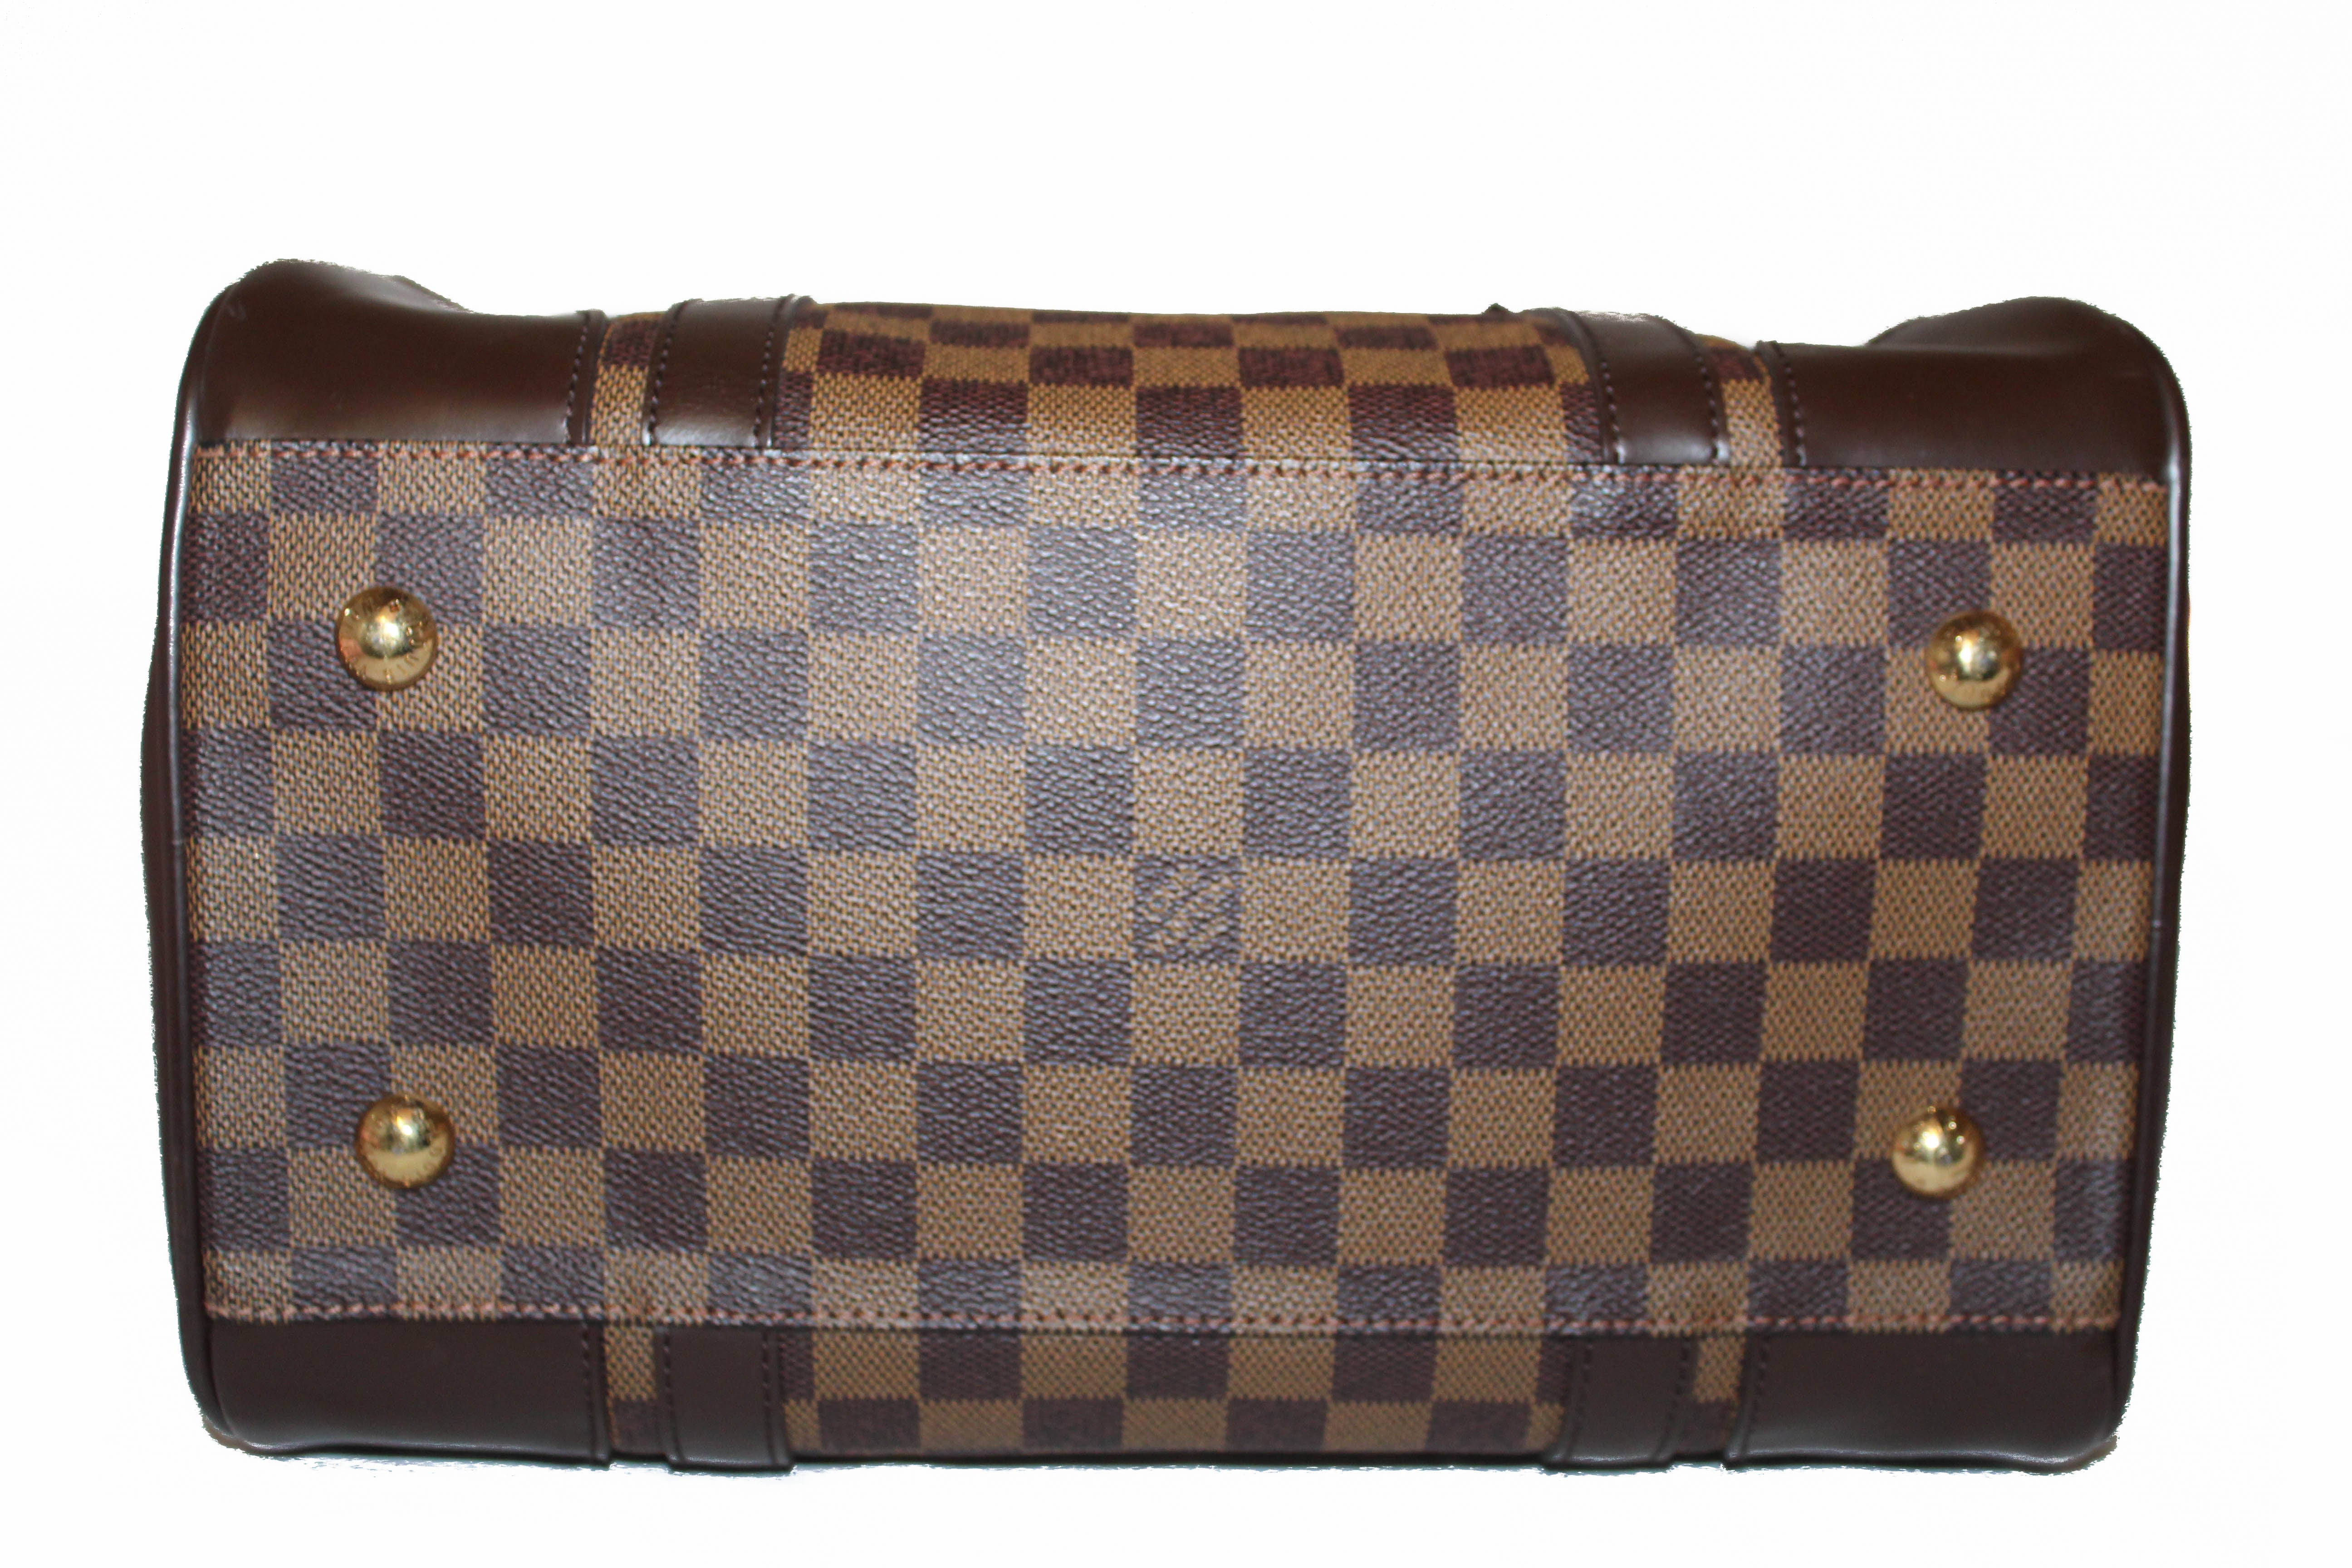 Authentic Louis Vuitton Damier Ebene Berkeley Handbag Part 2 